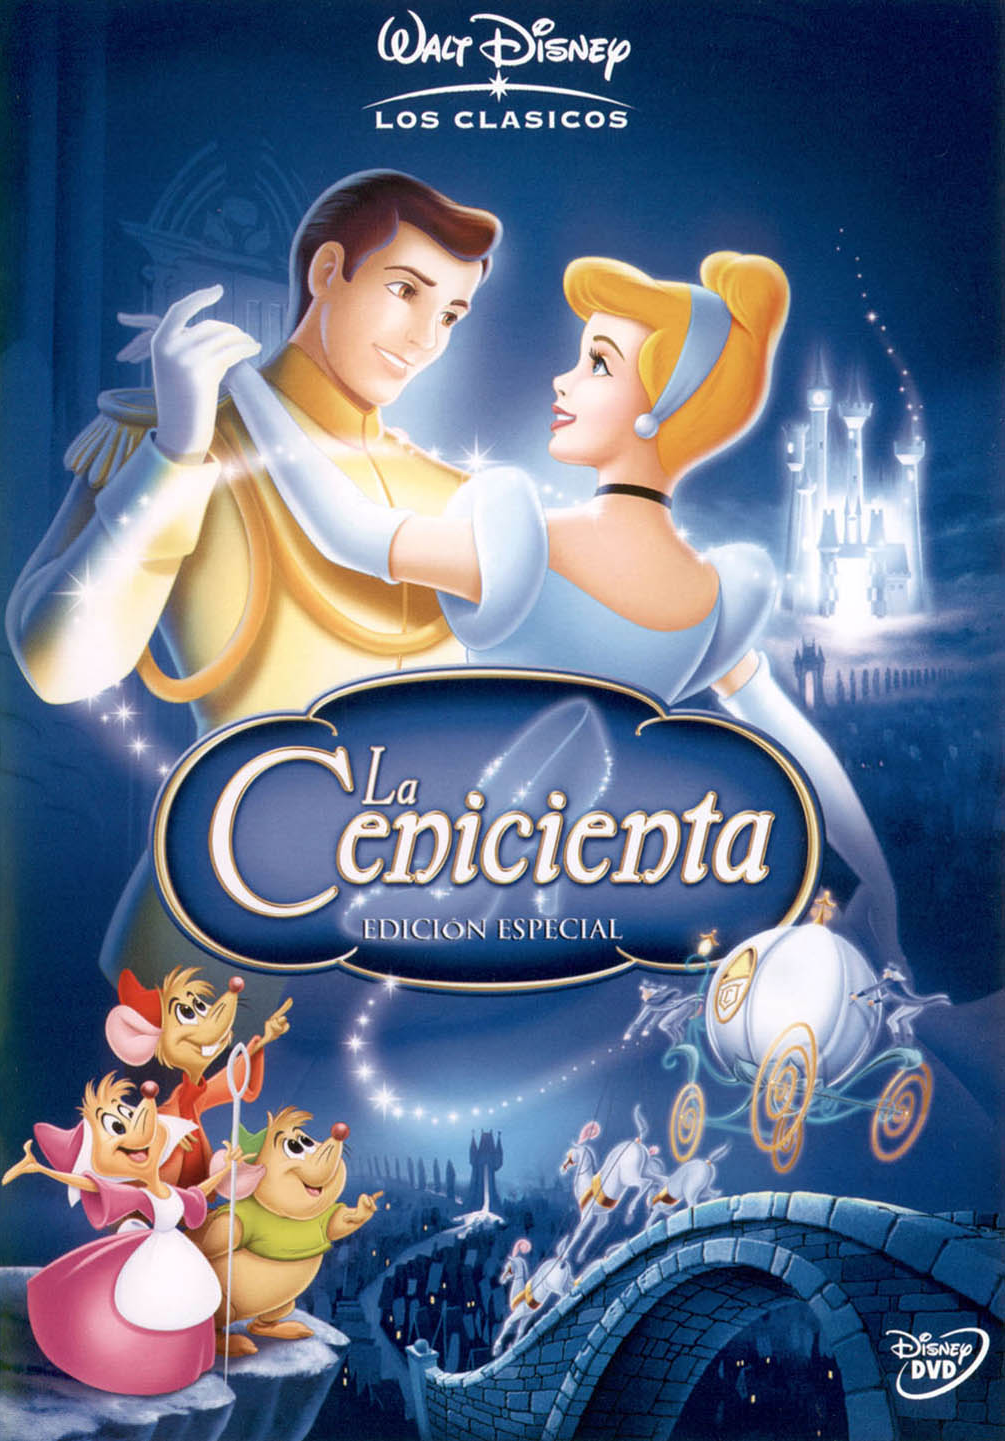 Cenicienta [2000 TV Movie]